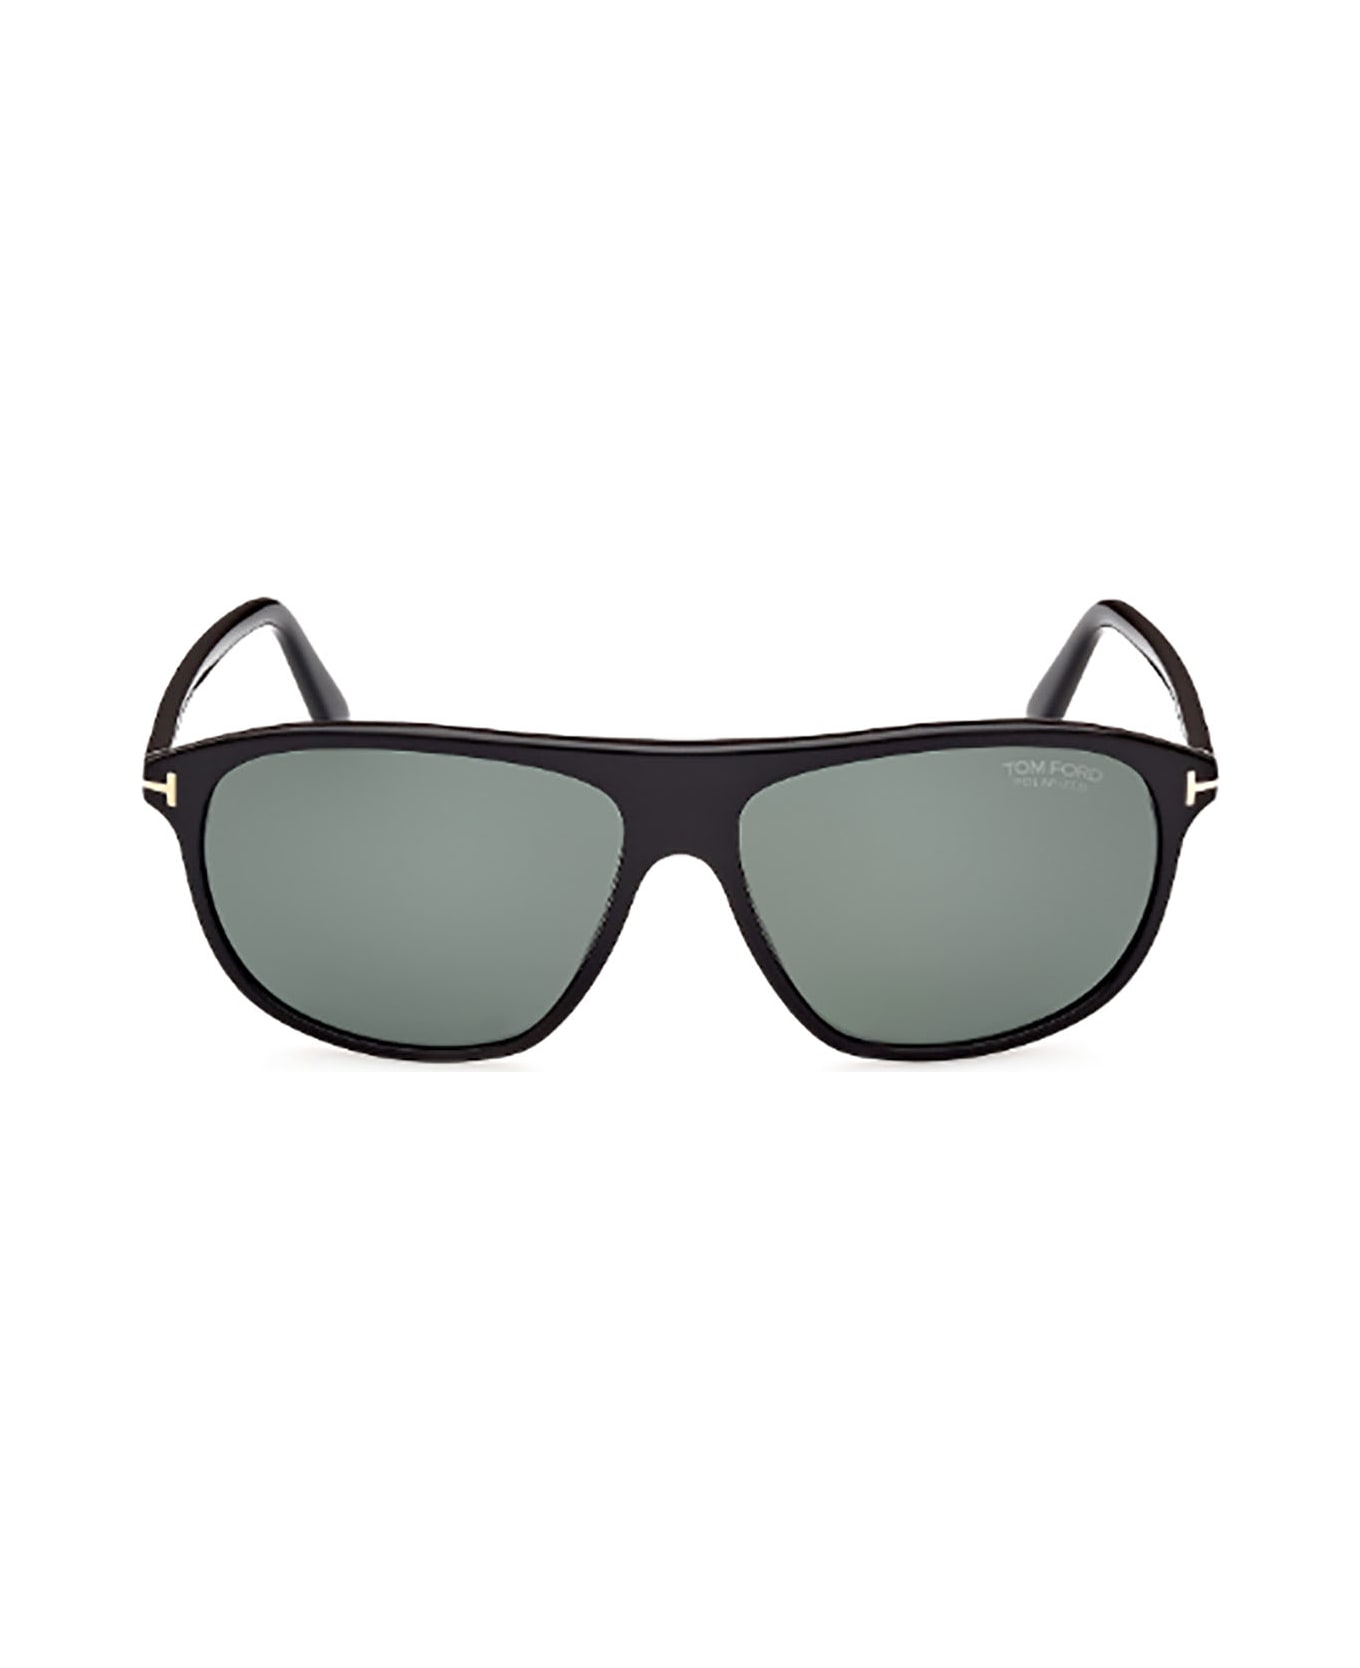 Tom Ford Eyewear FT1027 Sunglasses - R